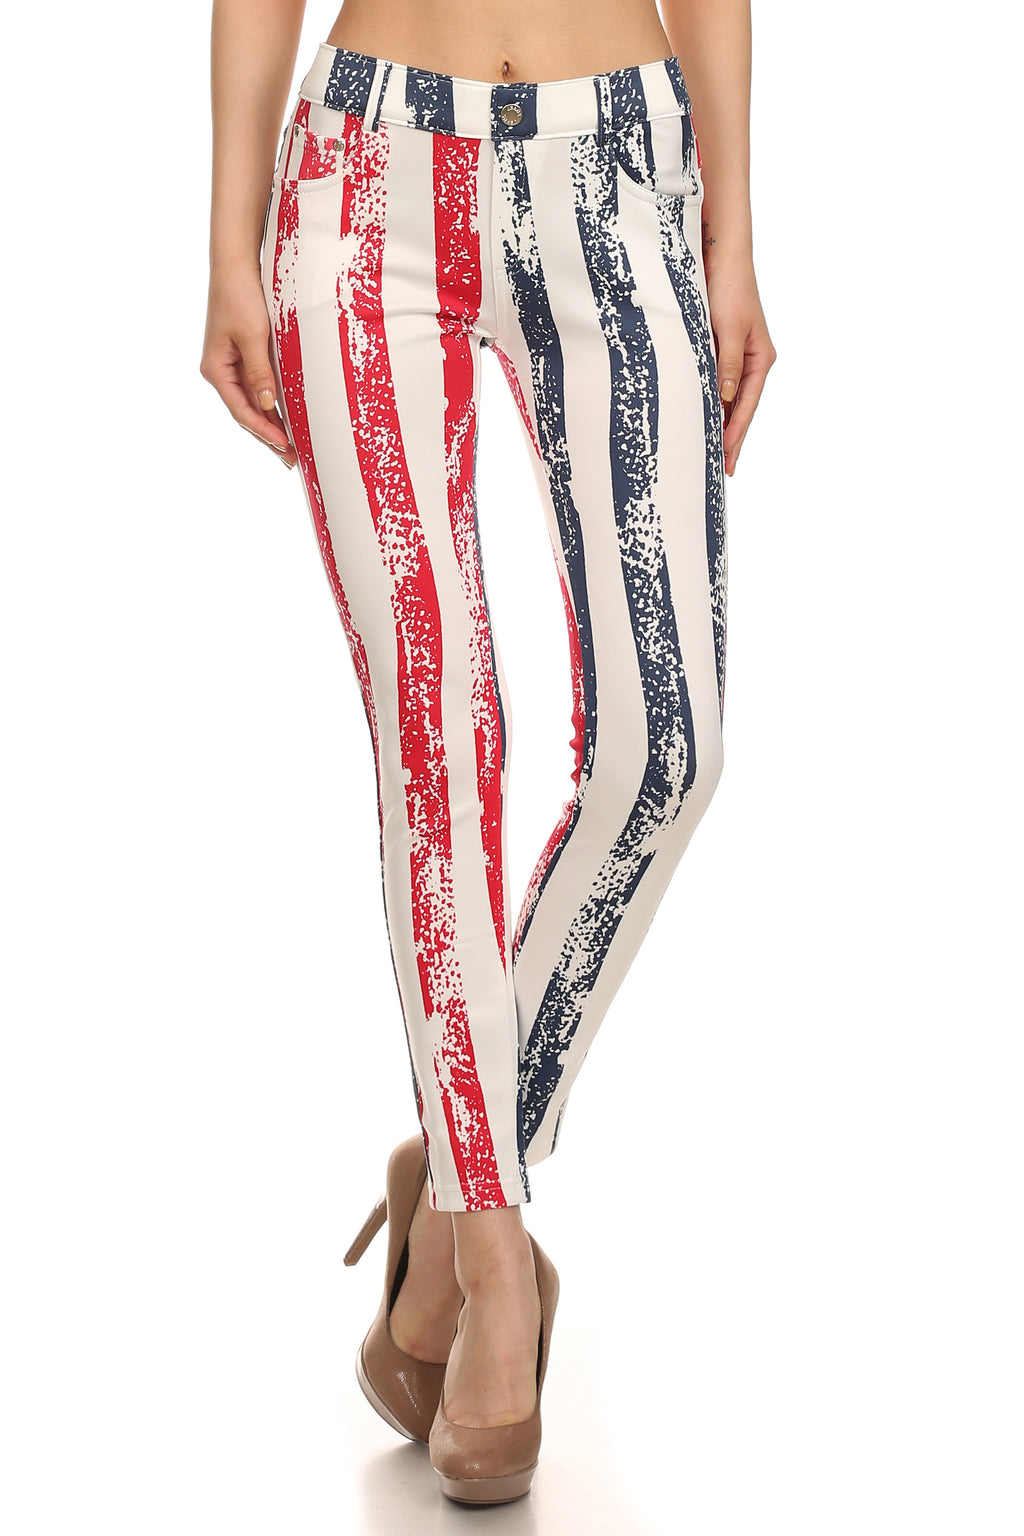 All Stripes American Flag Printed Jeggings katambra